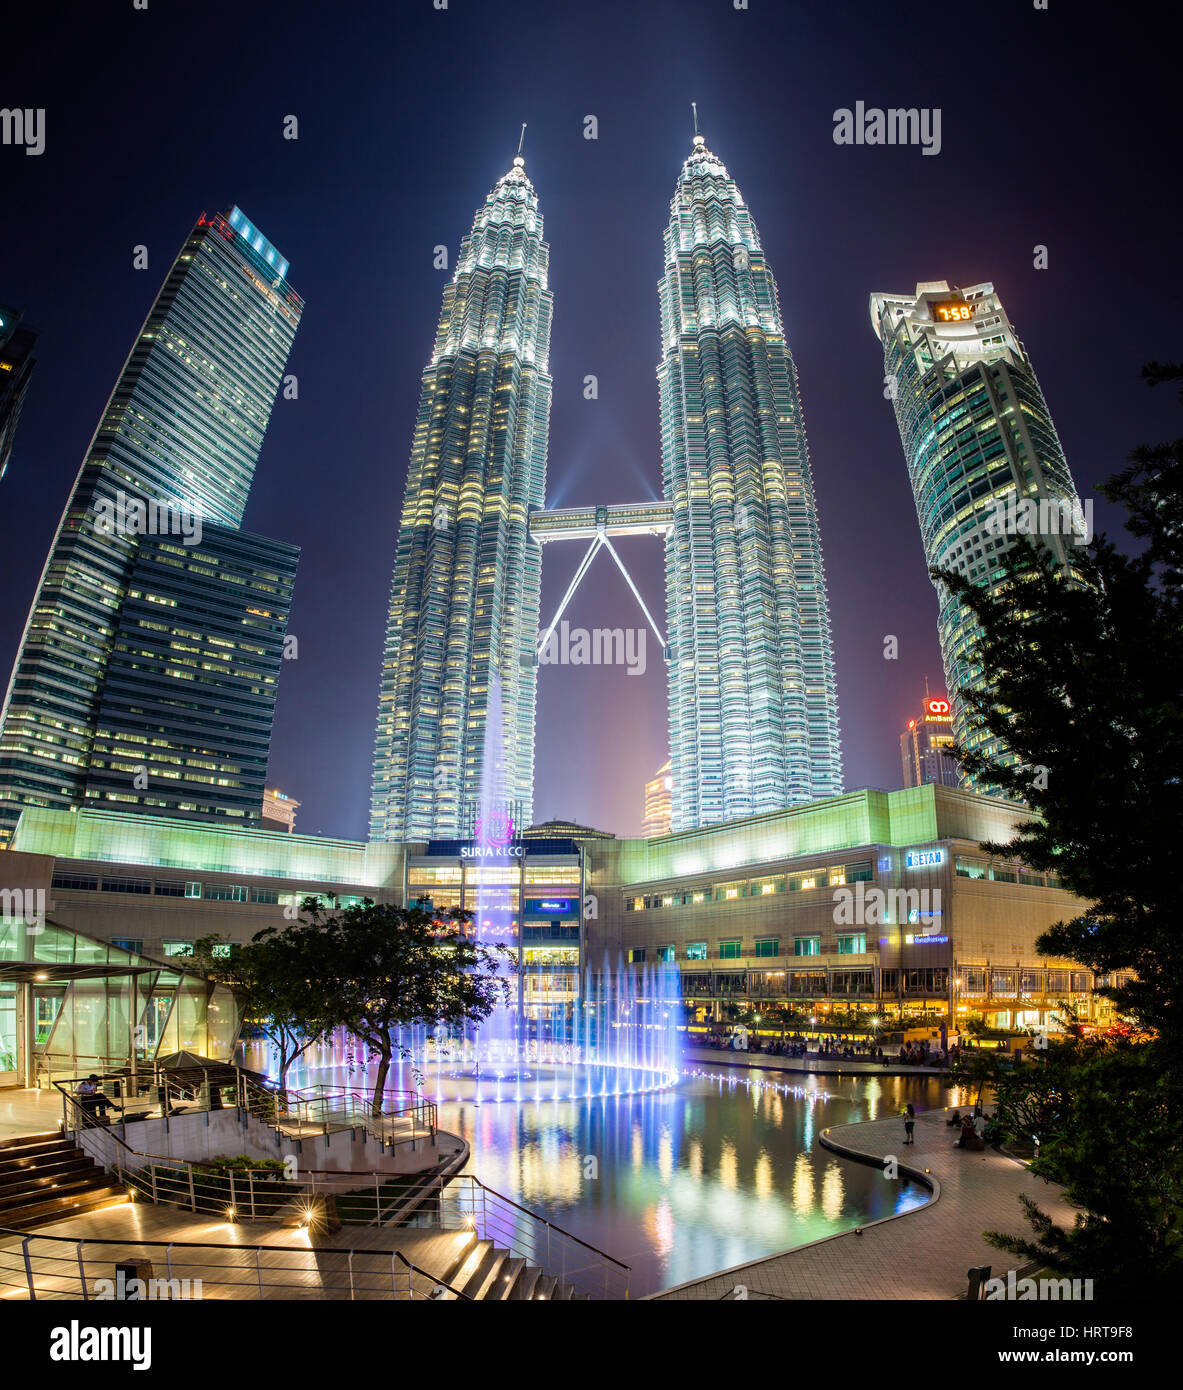 Kuala Lumpur, Malaysia - 24. Juli 2014: Brunnen-Show in der Nacht vor den Petronas Twin Towers und Suria KLCC Mall. Stockfoto